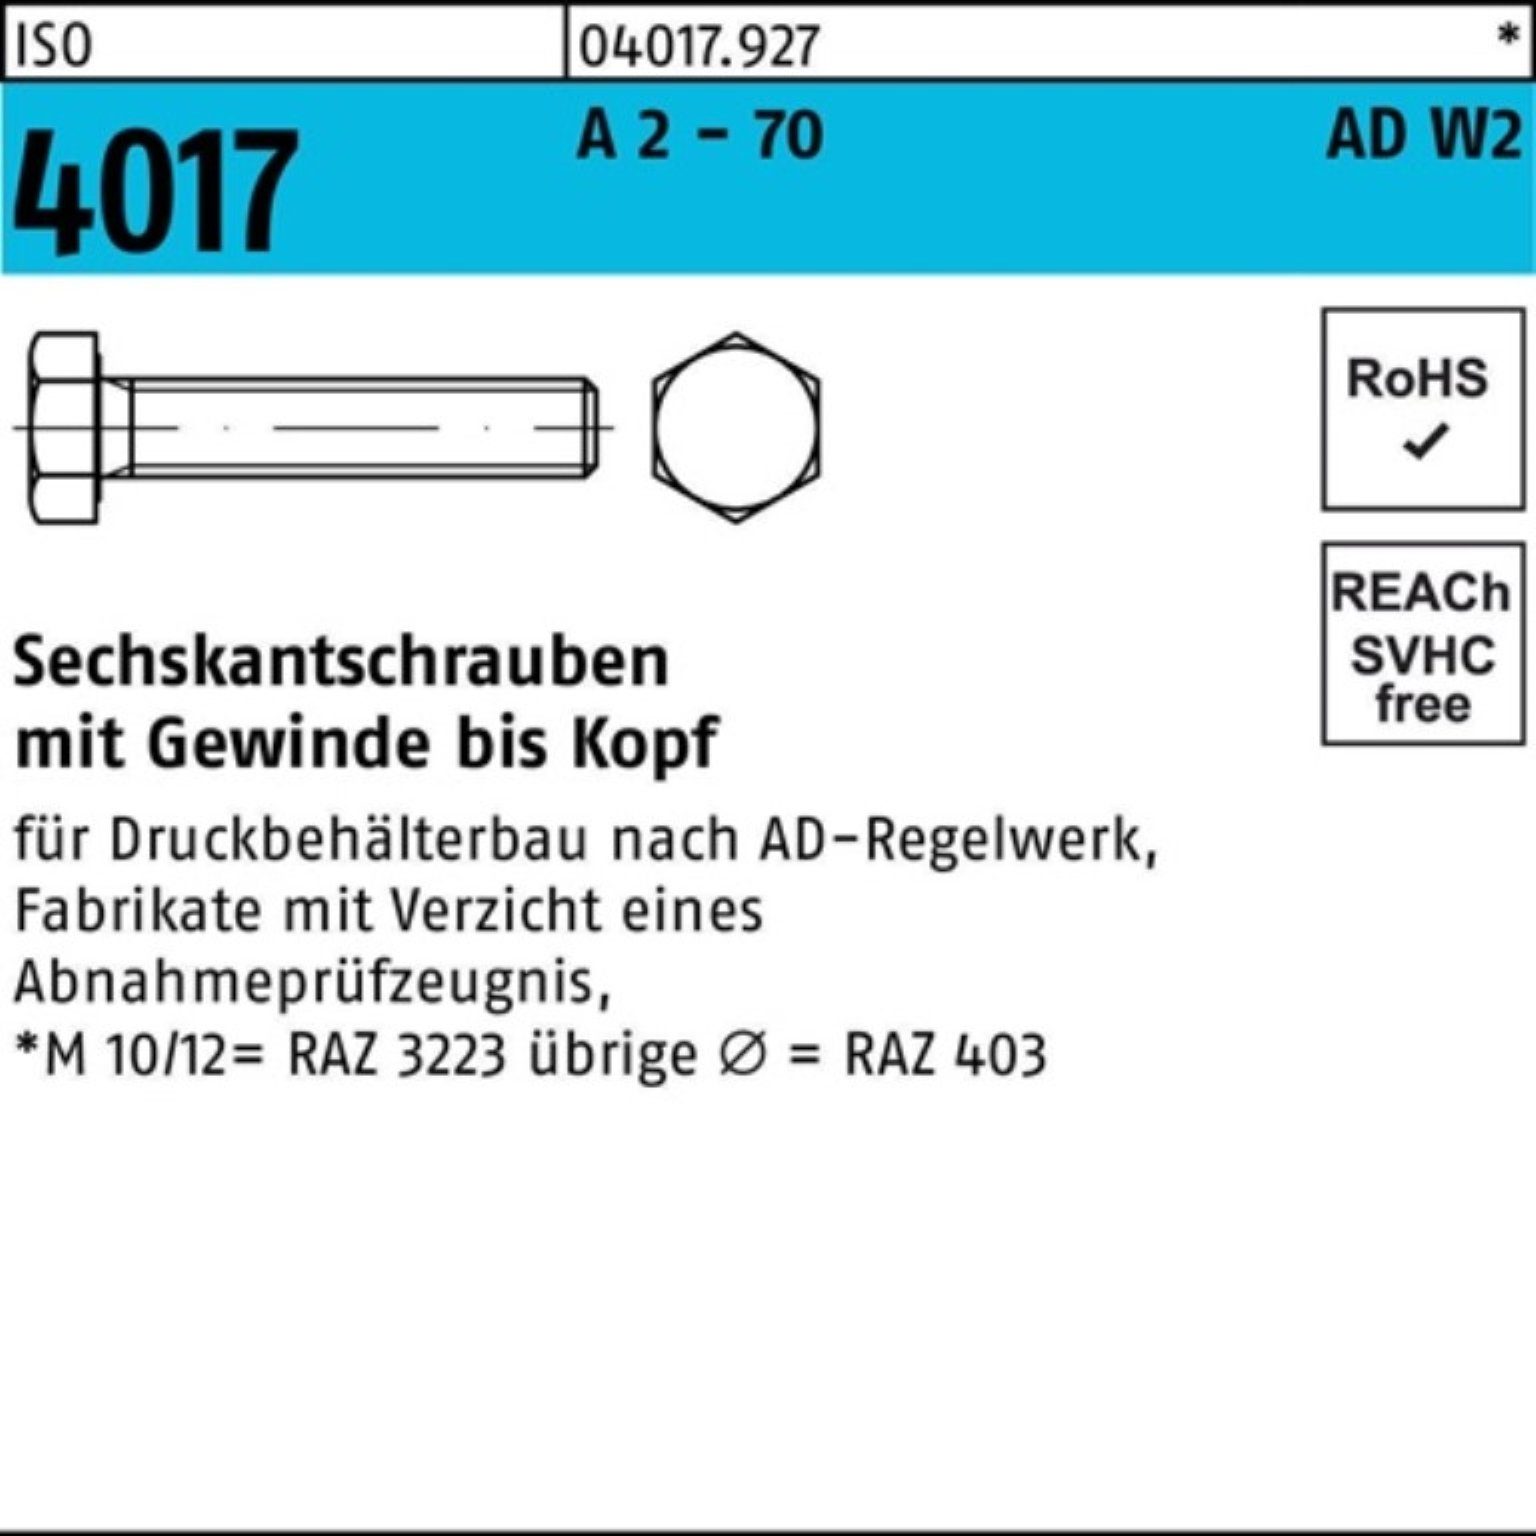 Bufab Sechskantschraube 100er Pack Sechskantschraube ISO 4017 VG M20x 120 A 2 - 70 AD-W2 10 St